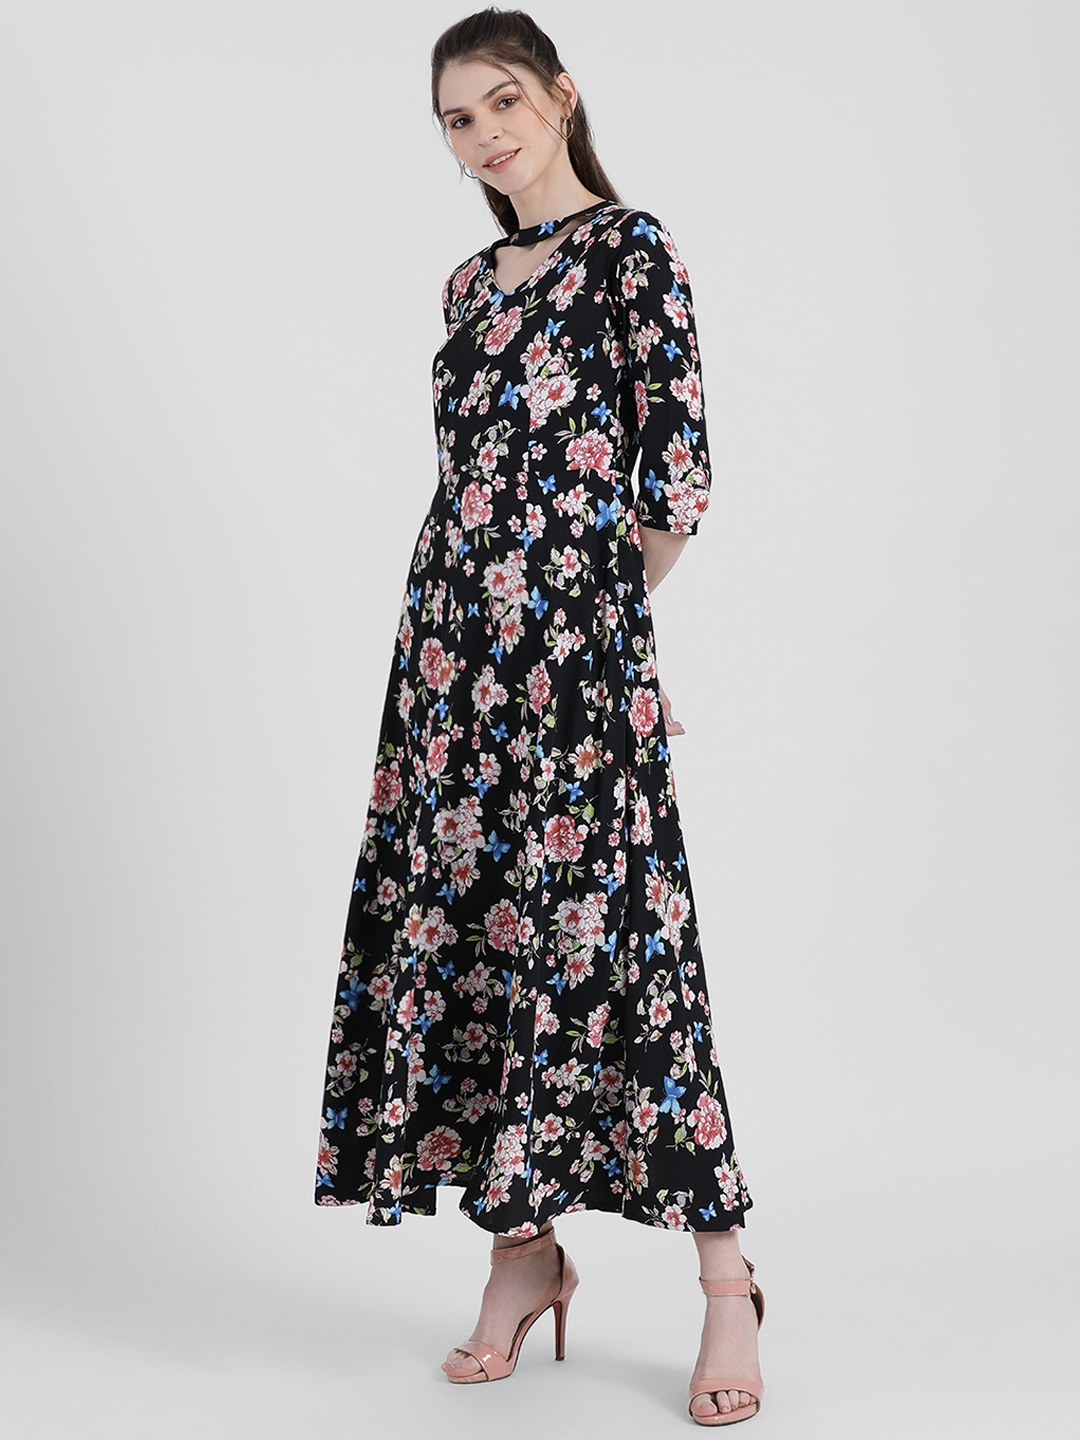 ZINK | Zink London Women's Printed Maxi Dress 1